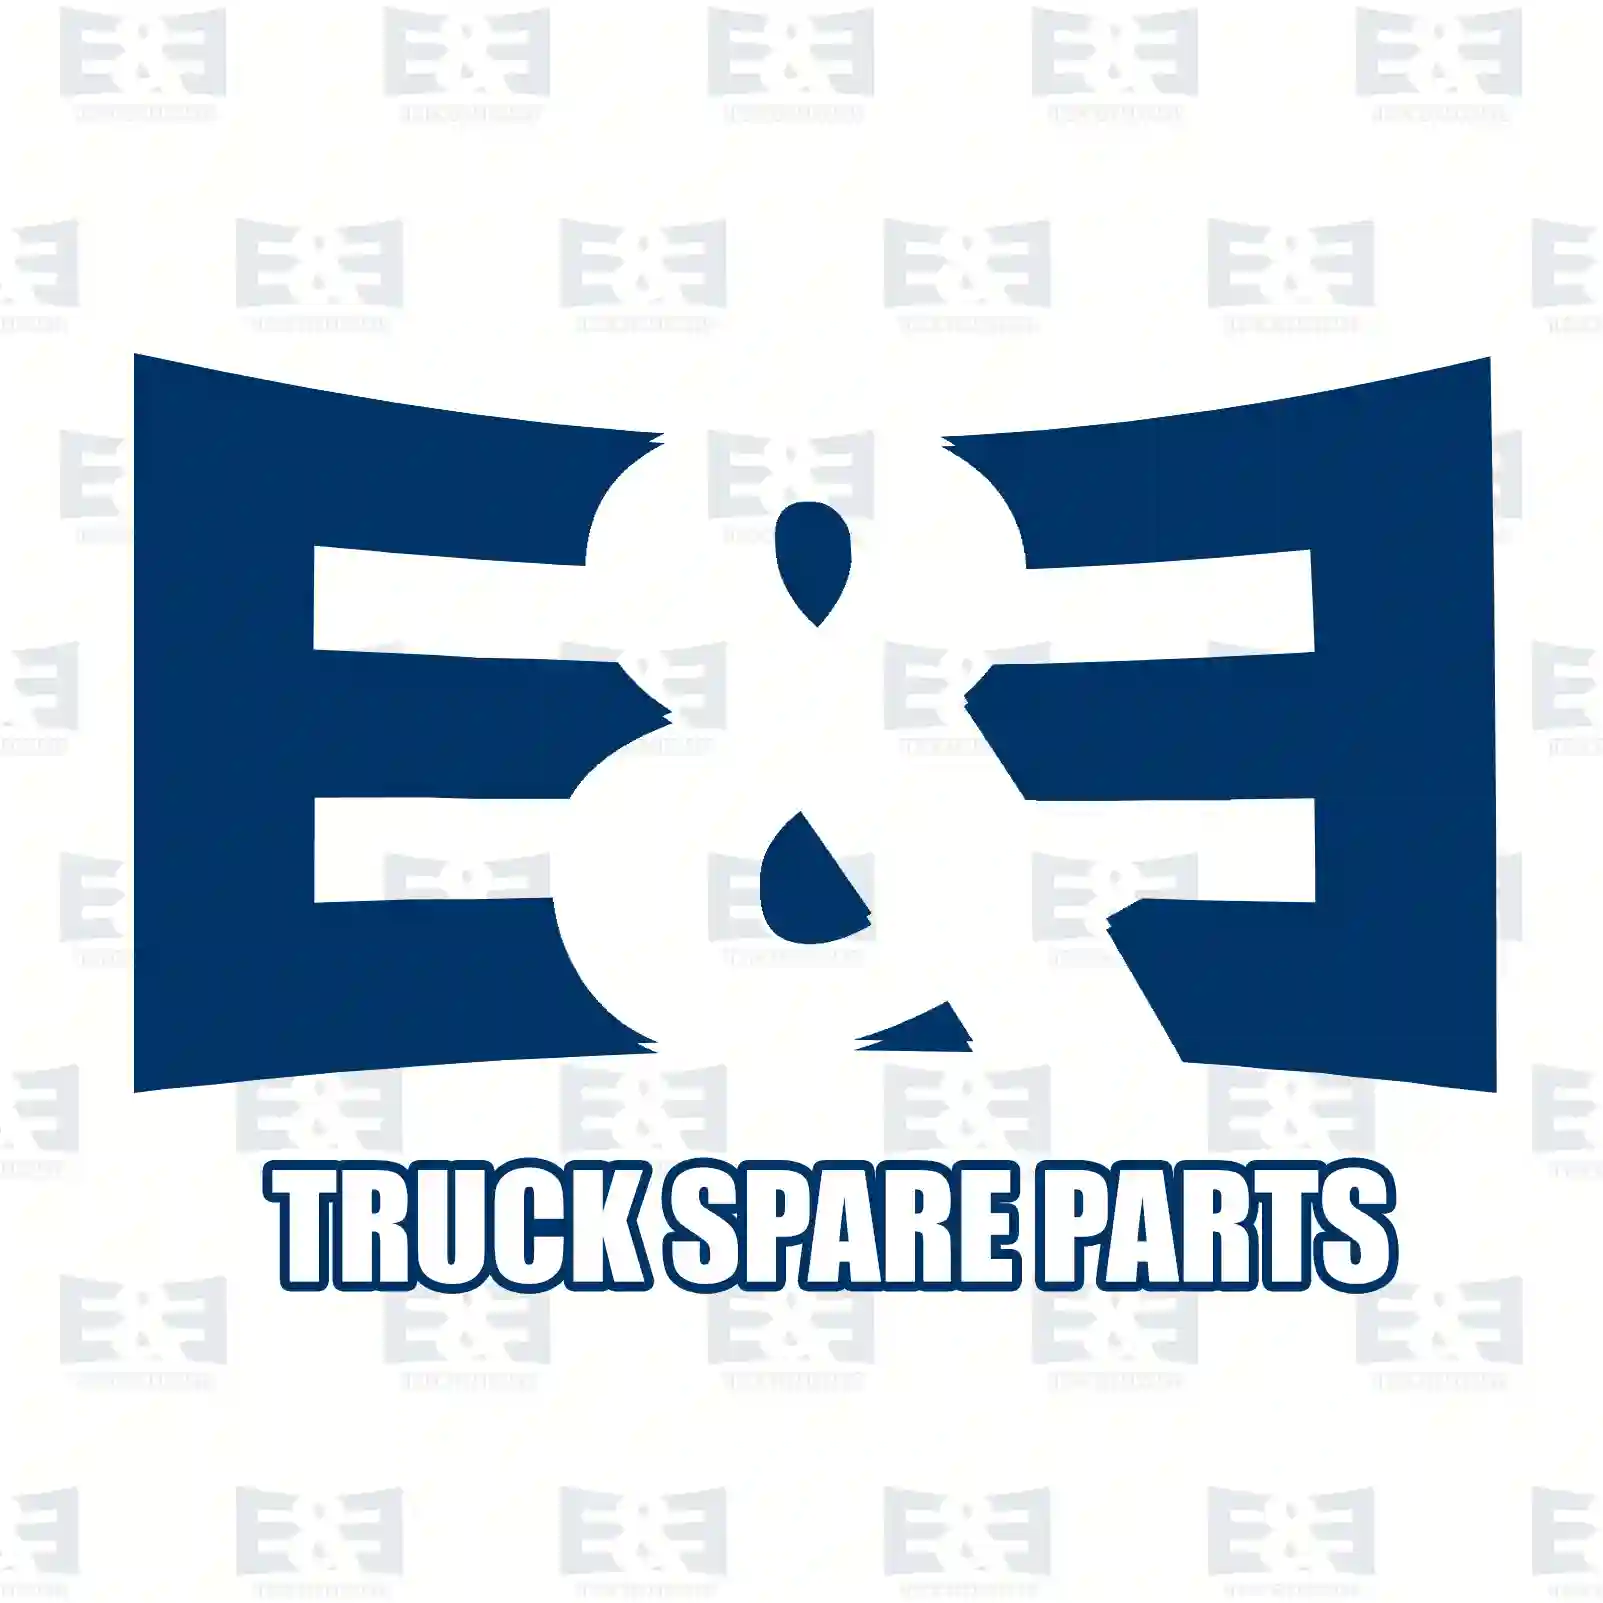 Cover, gearbox housing, 2E2278876, 7421550882, 20547687, 21550882 ||  2E2278876 E&E Truck Spare Parts | Truck Spare Parts, Auotomotive Spare Parts Cover, gearbox housing, 2E2278876, 7421550882, 20547687, 21550882 ||  2E2278876 E&E Truck Spare Parts | Truck Spare Parts, Auotomotive Spare Parts